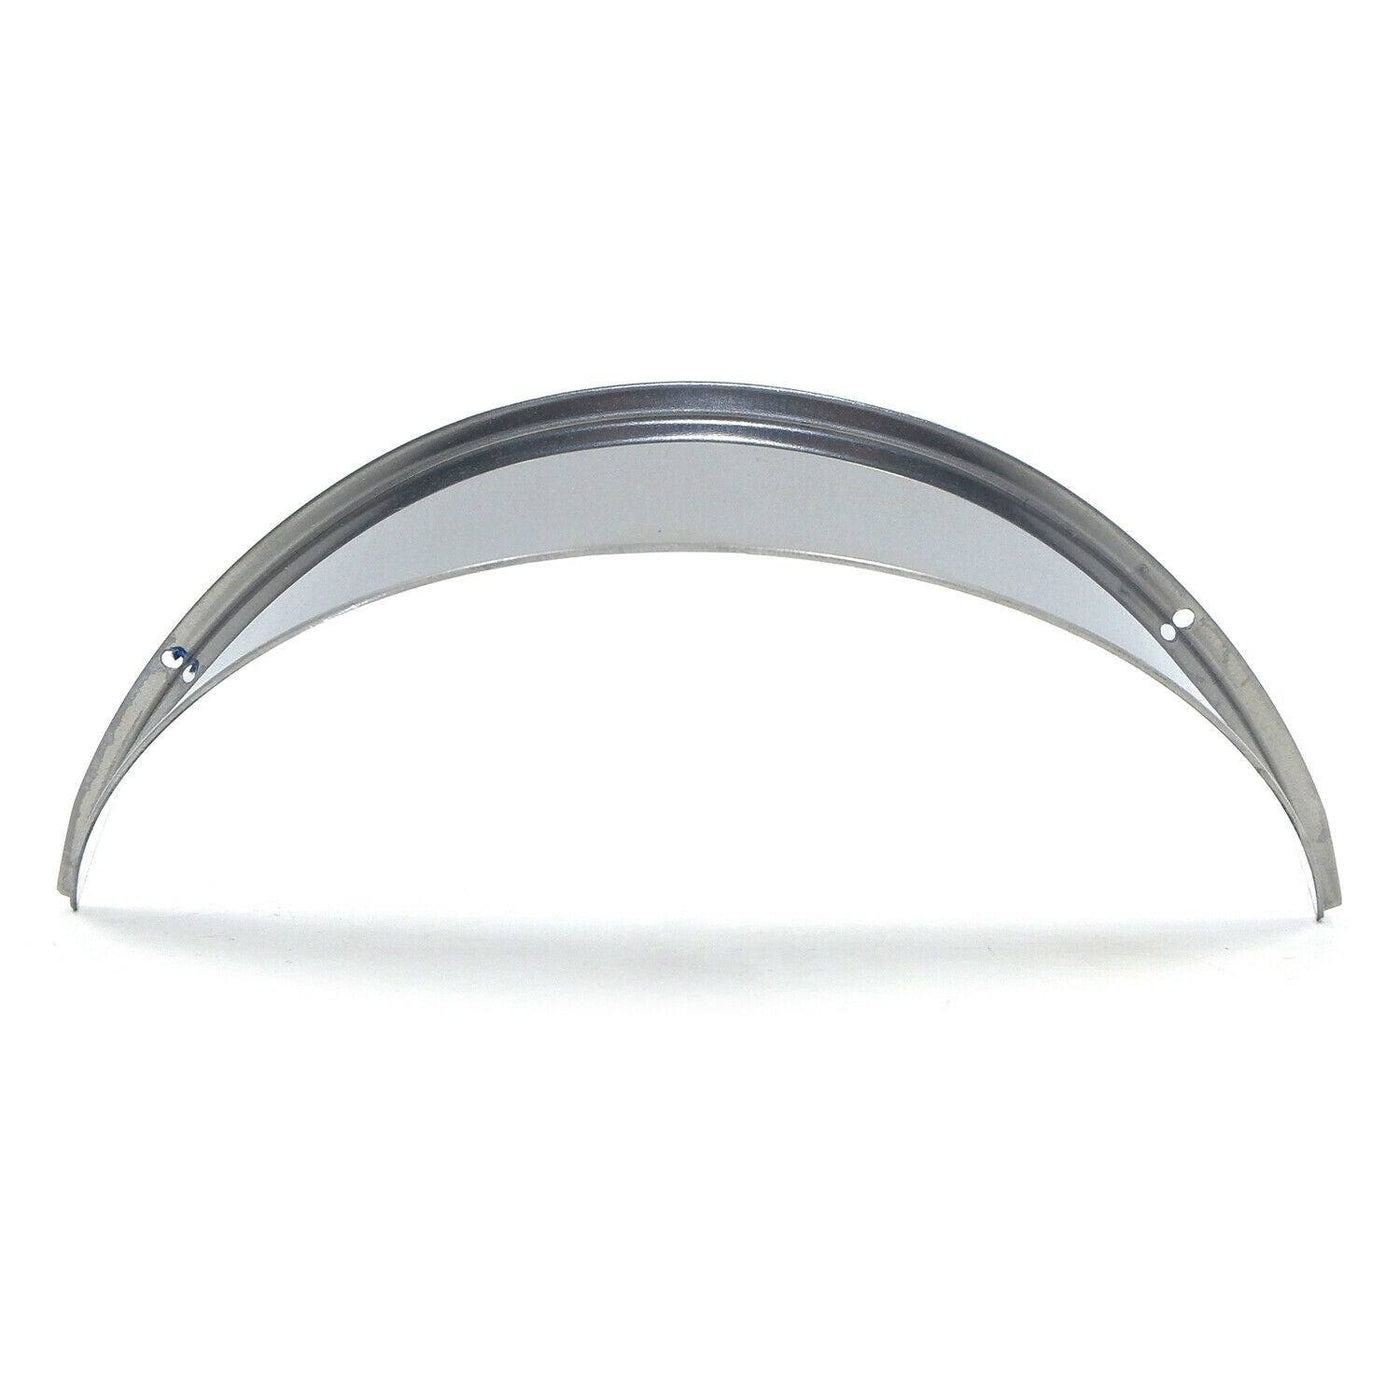 Steel Headlight Visor 5.75" 5-3/4" Headlight for Harley Sportster Softail Dyna - Moto Life Products